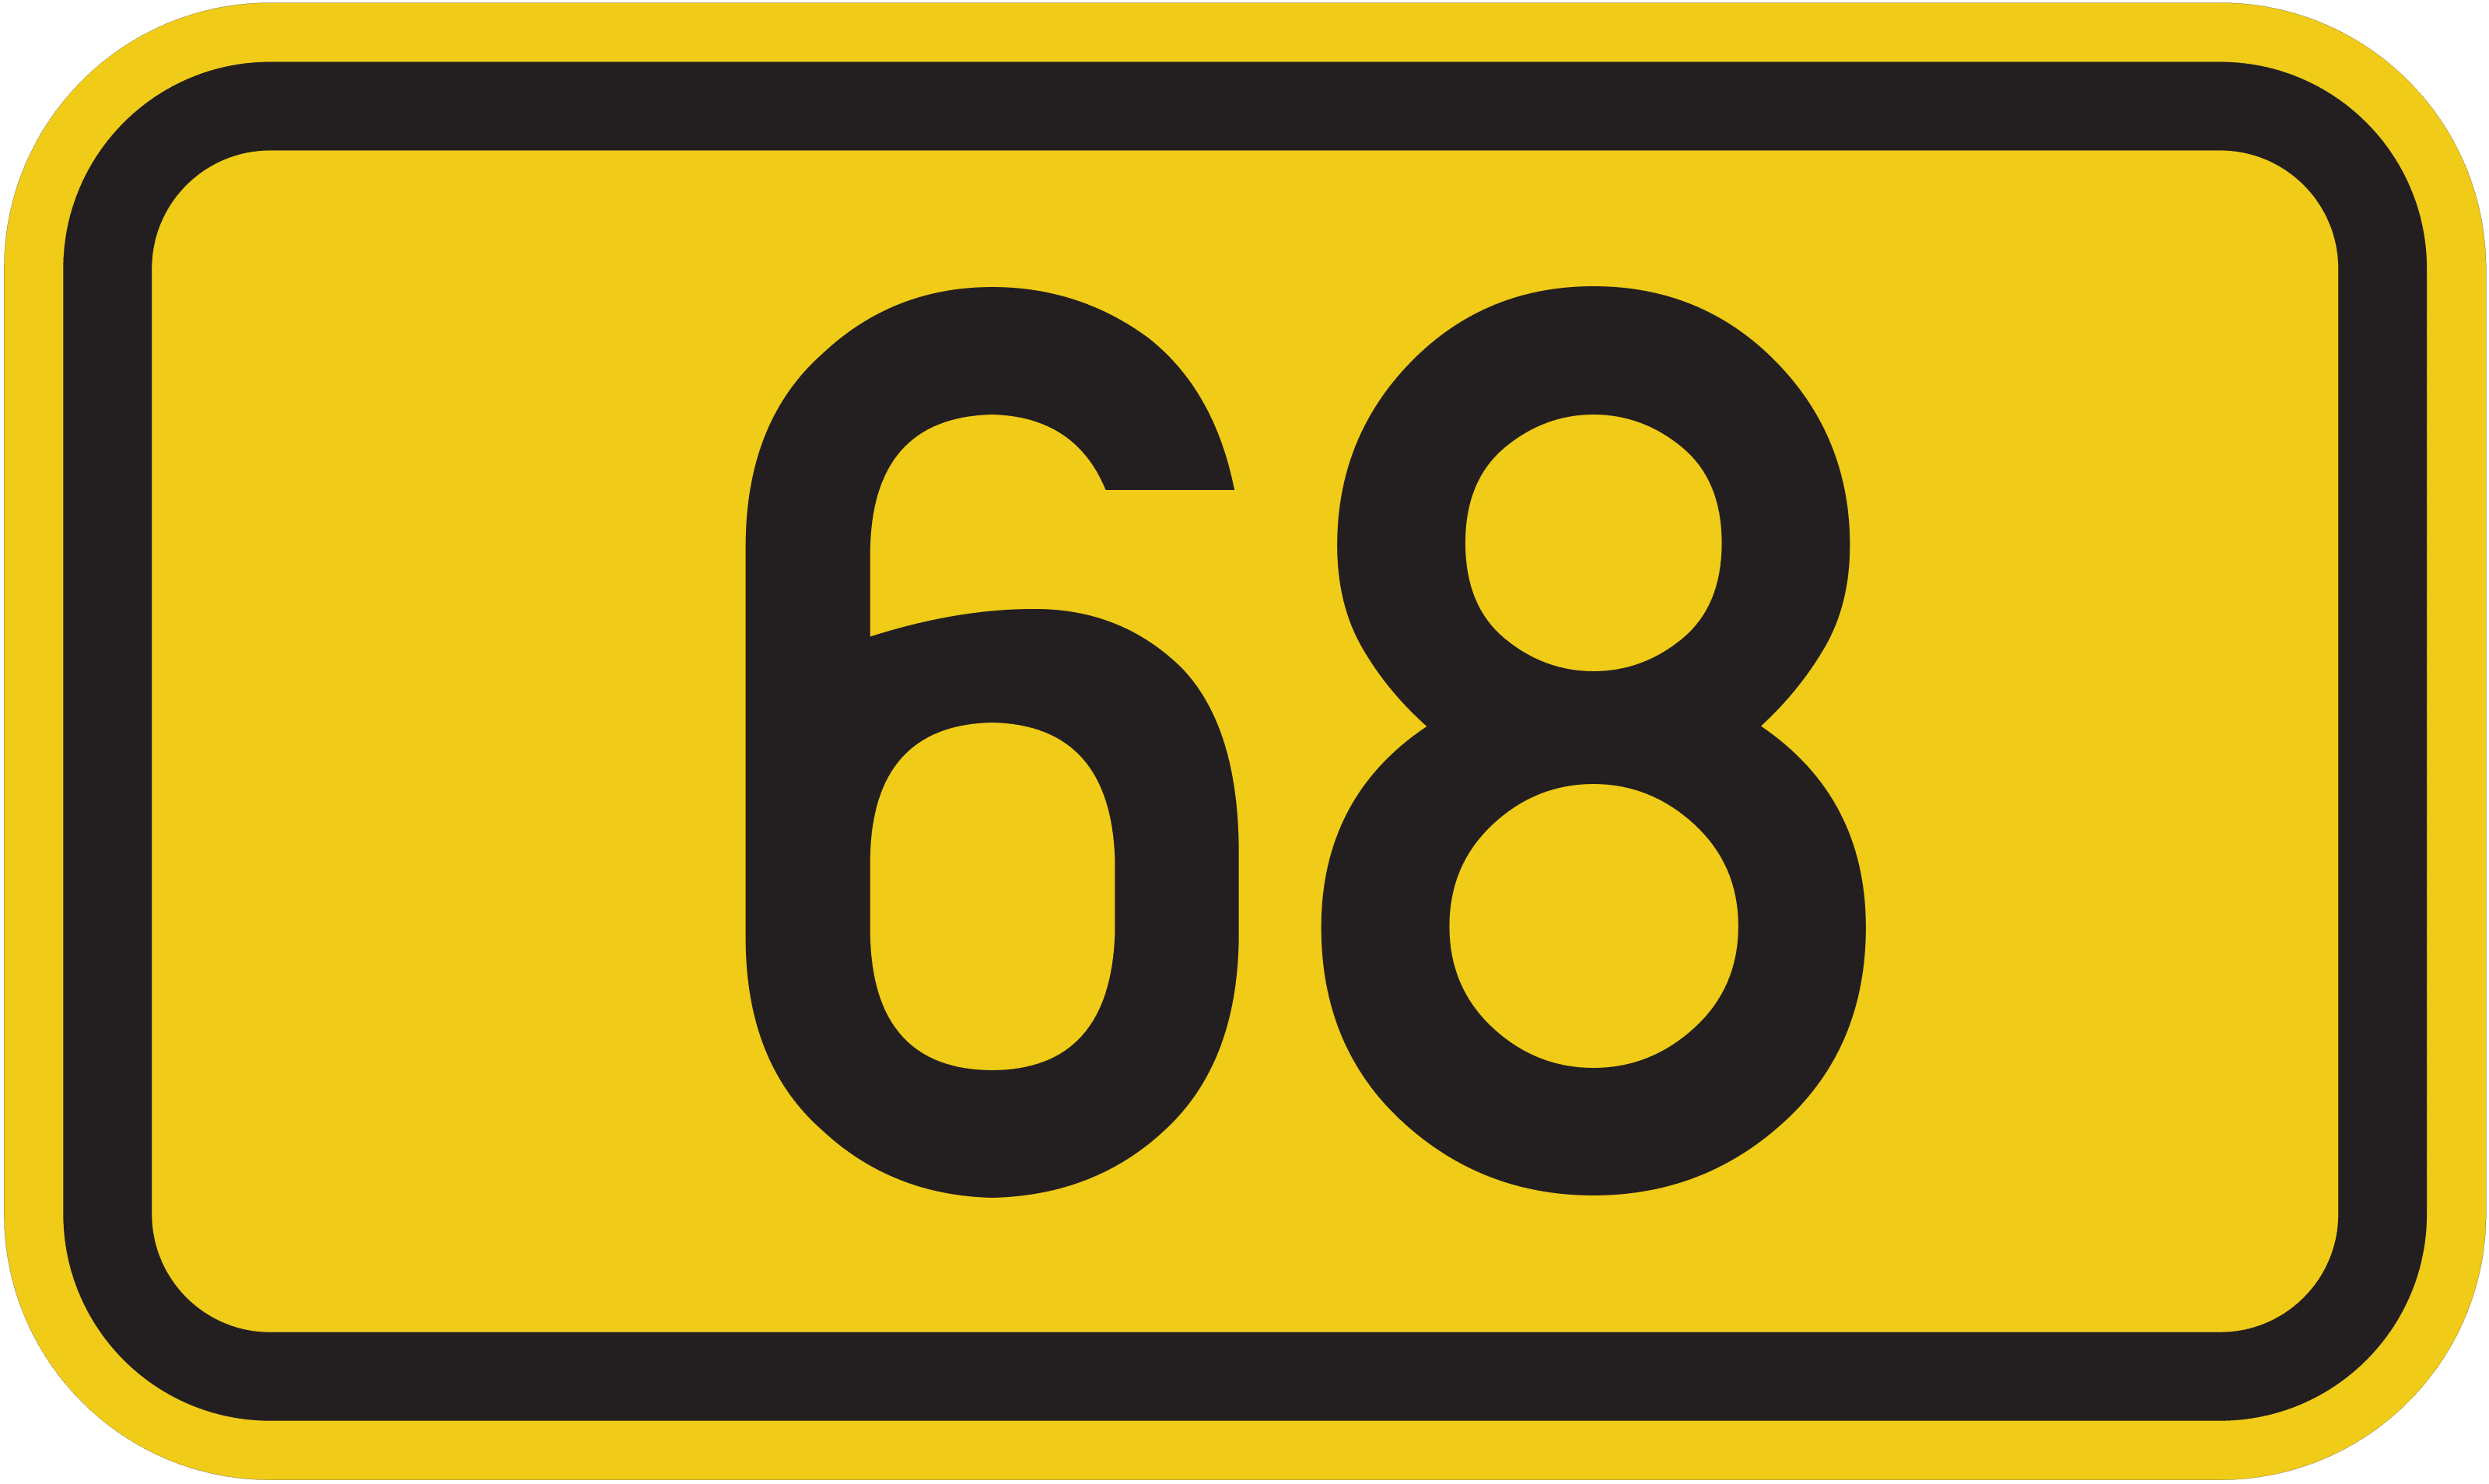 Straßenschild Bundesstraße 68